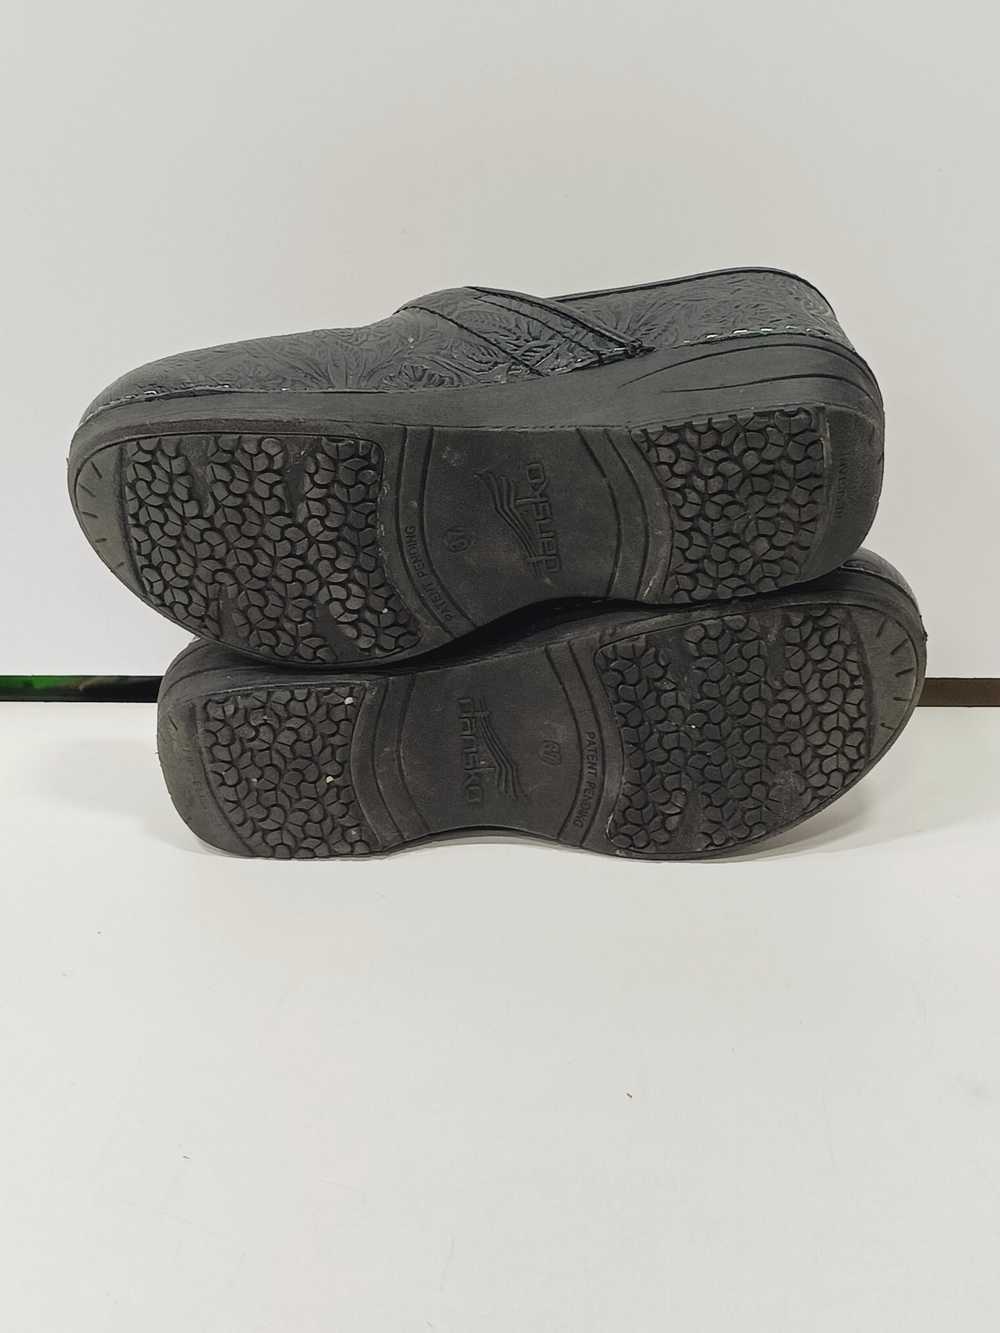 Dansko Women's Black Tooled Leather Clogs Size 37 - image 5